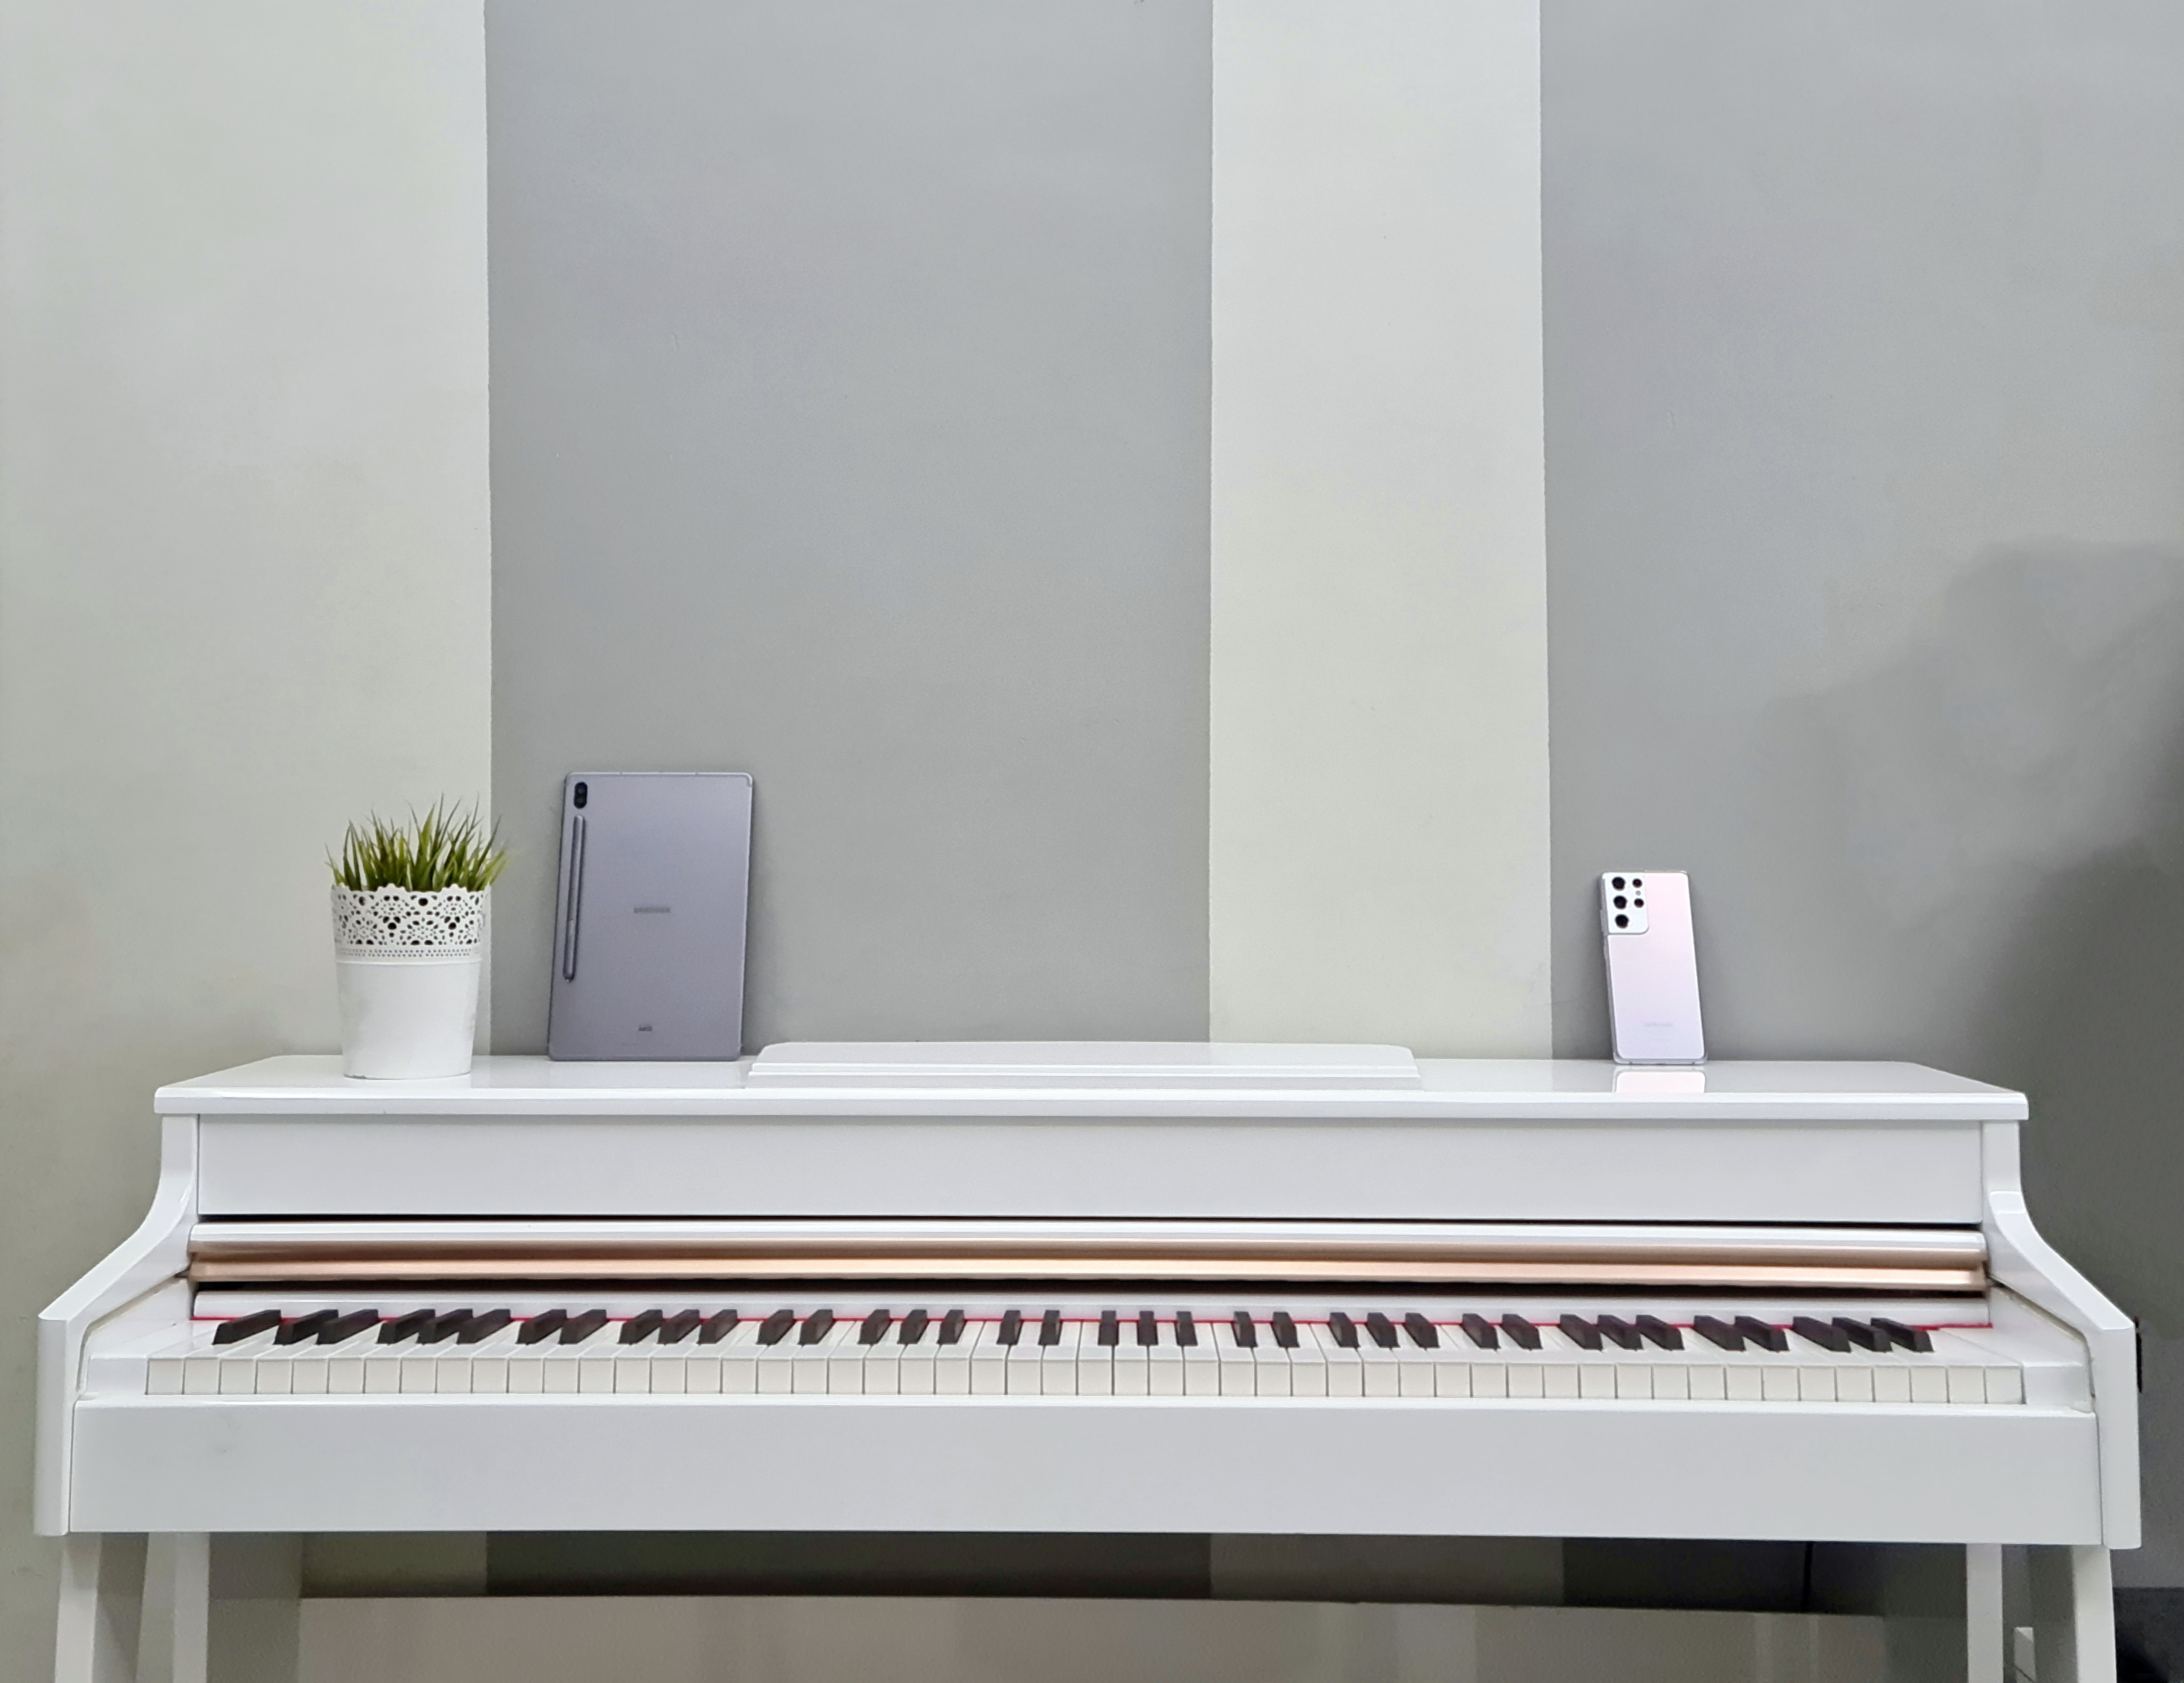 Perfecting my Piano Corner with Samsung Smart Moni... - Samsung Members